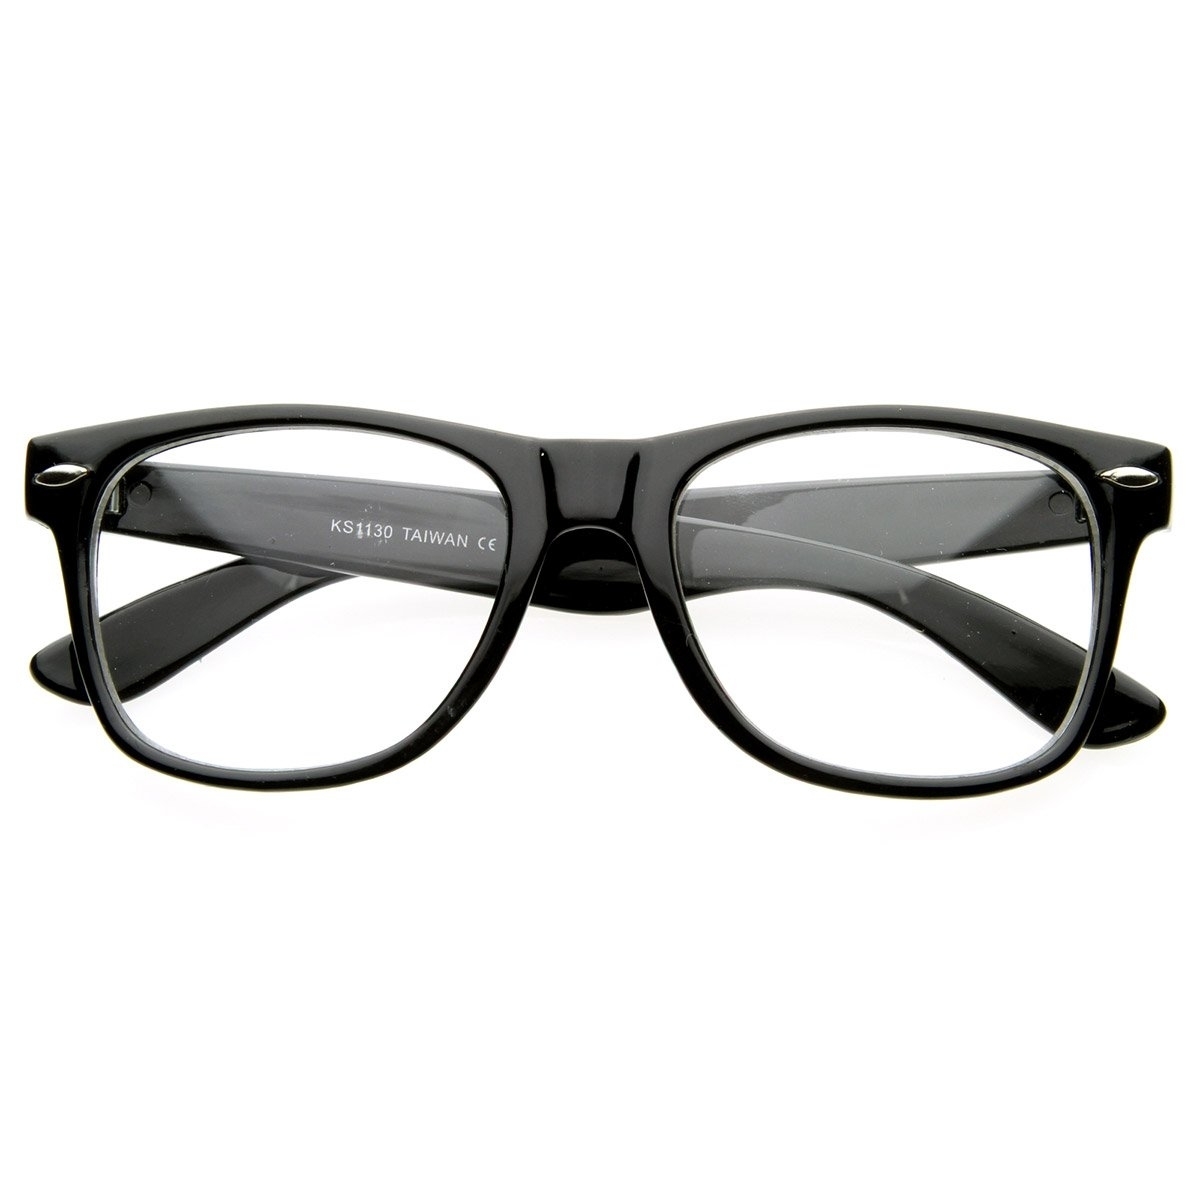 Vintage Inspired Eyewear Original Geek Nerd Clear Lens Horn Rimmed Glasses - Yellow Tortoise